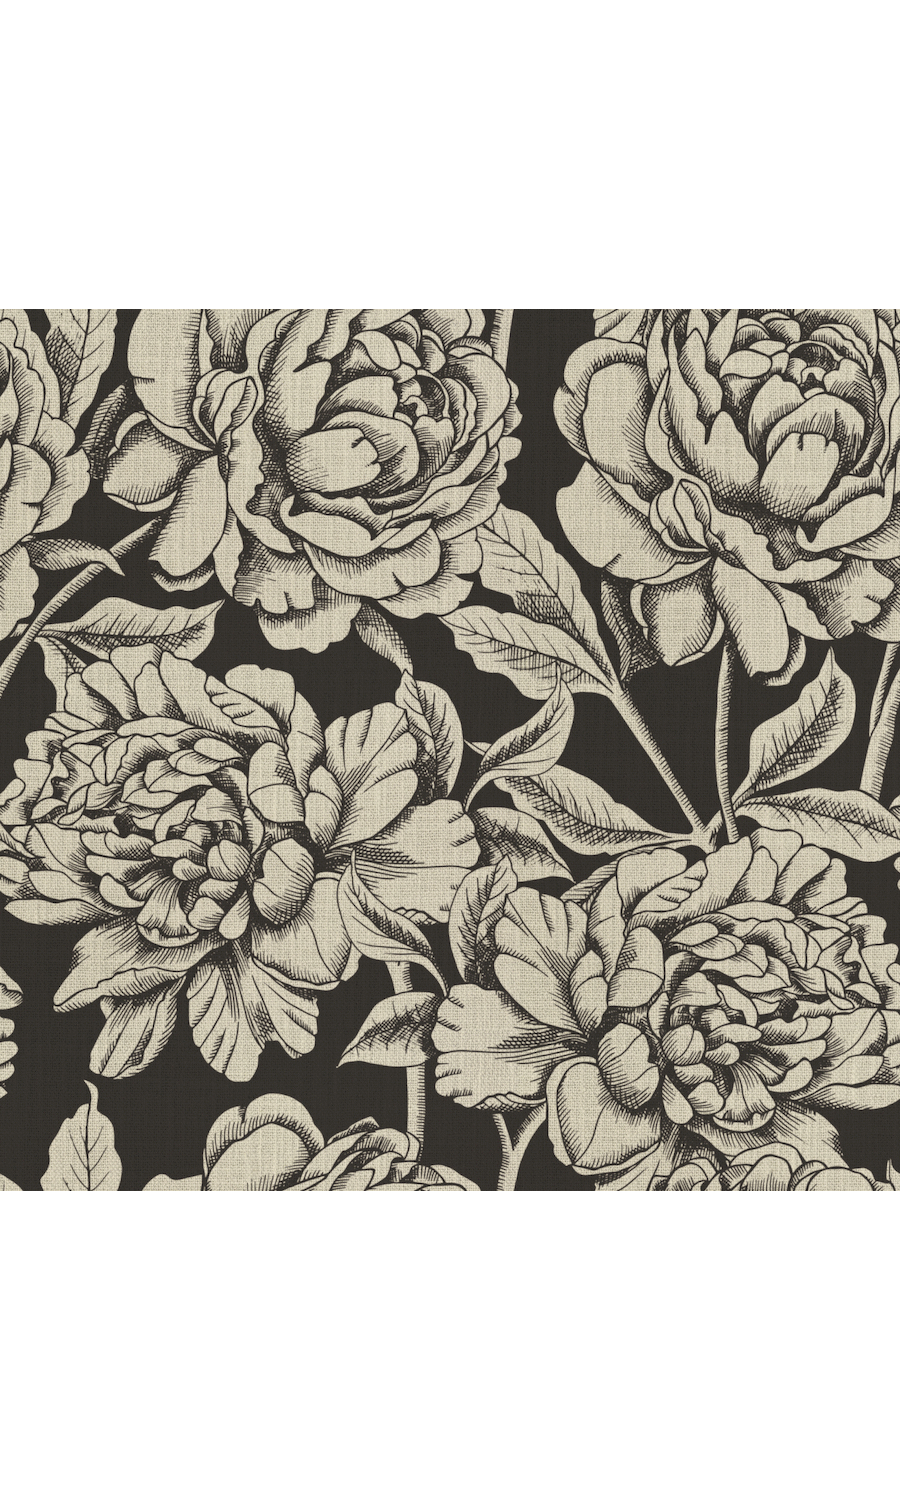 Botanical Bliss' Floral Print Curtains (Black/ Milky White)